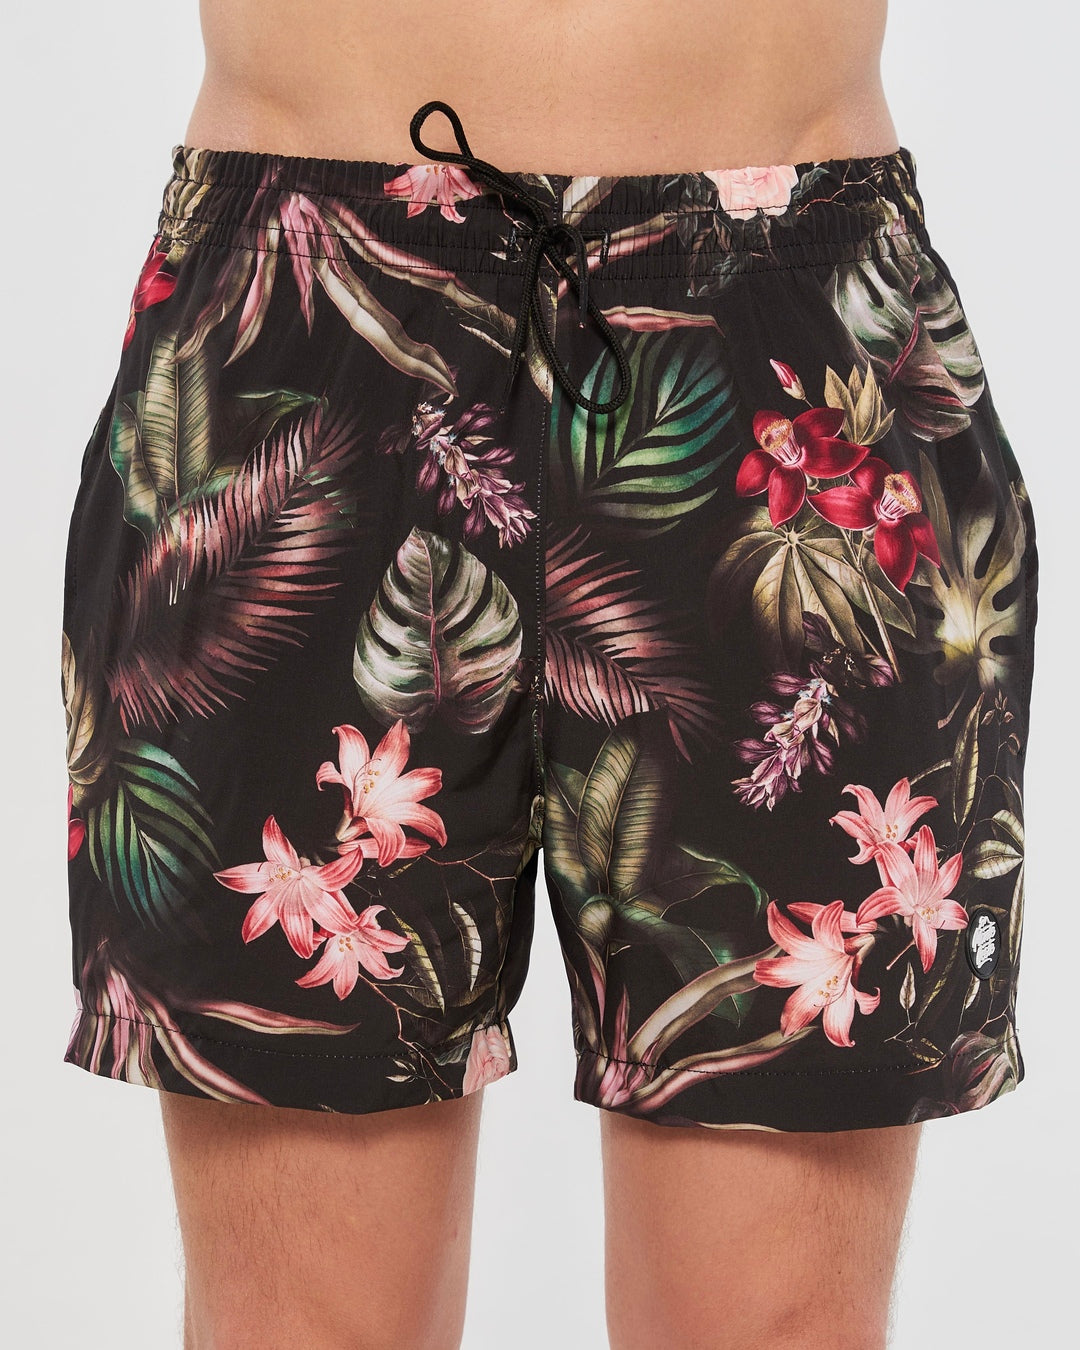 Water Shorts Elastic Printed - Floral